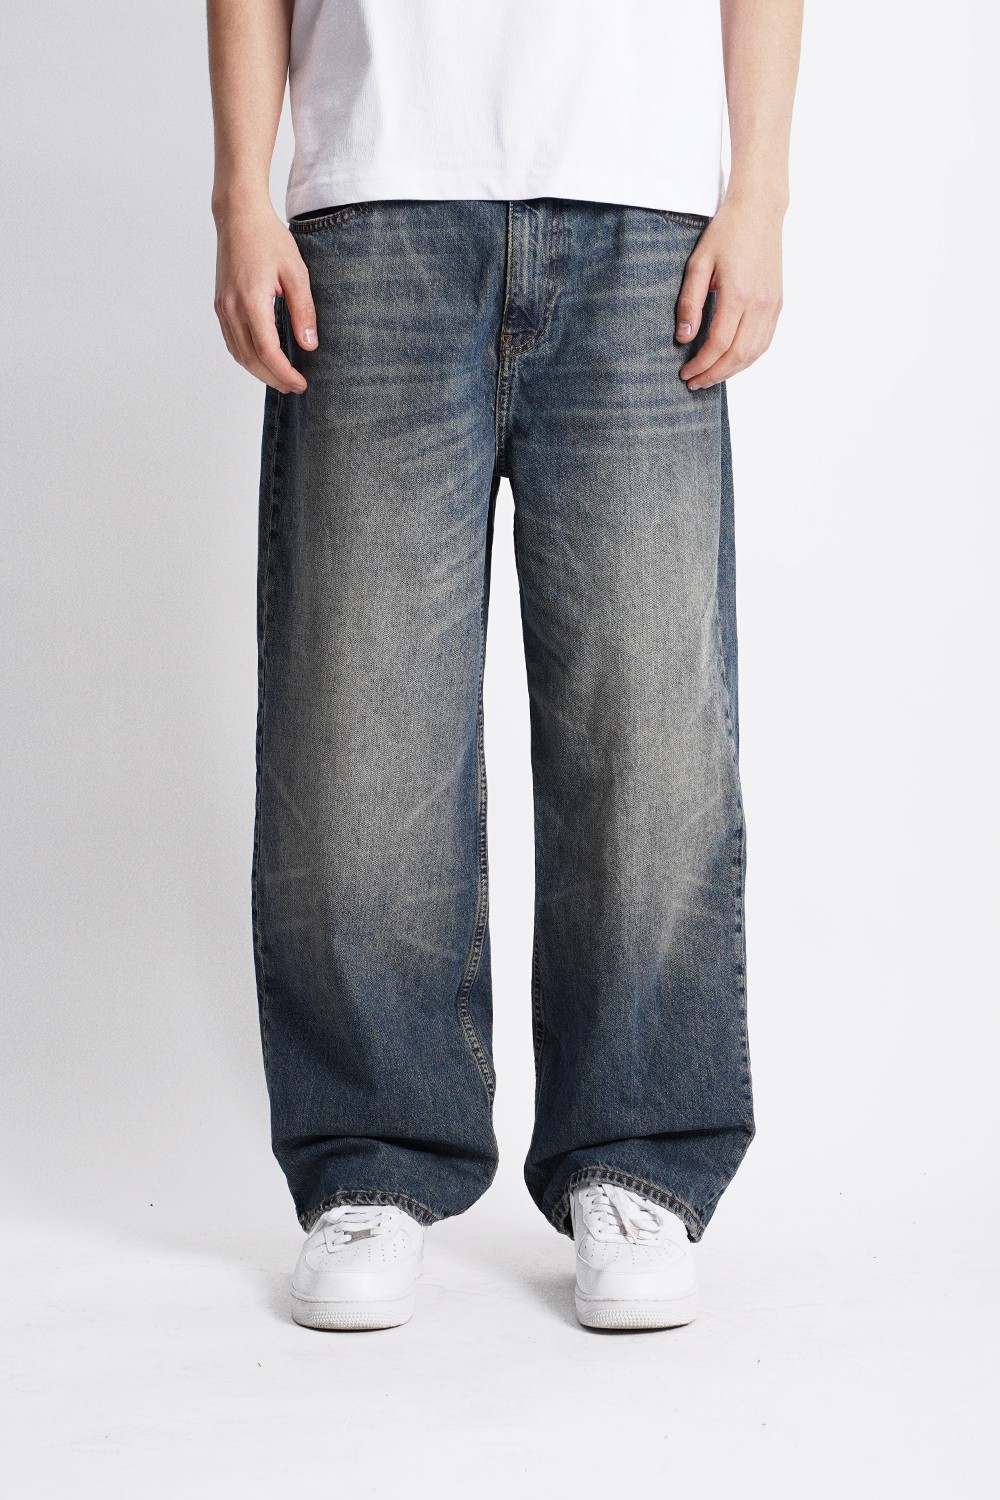 Stone Tint Jack Jeans (URBN-B-173)